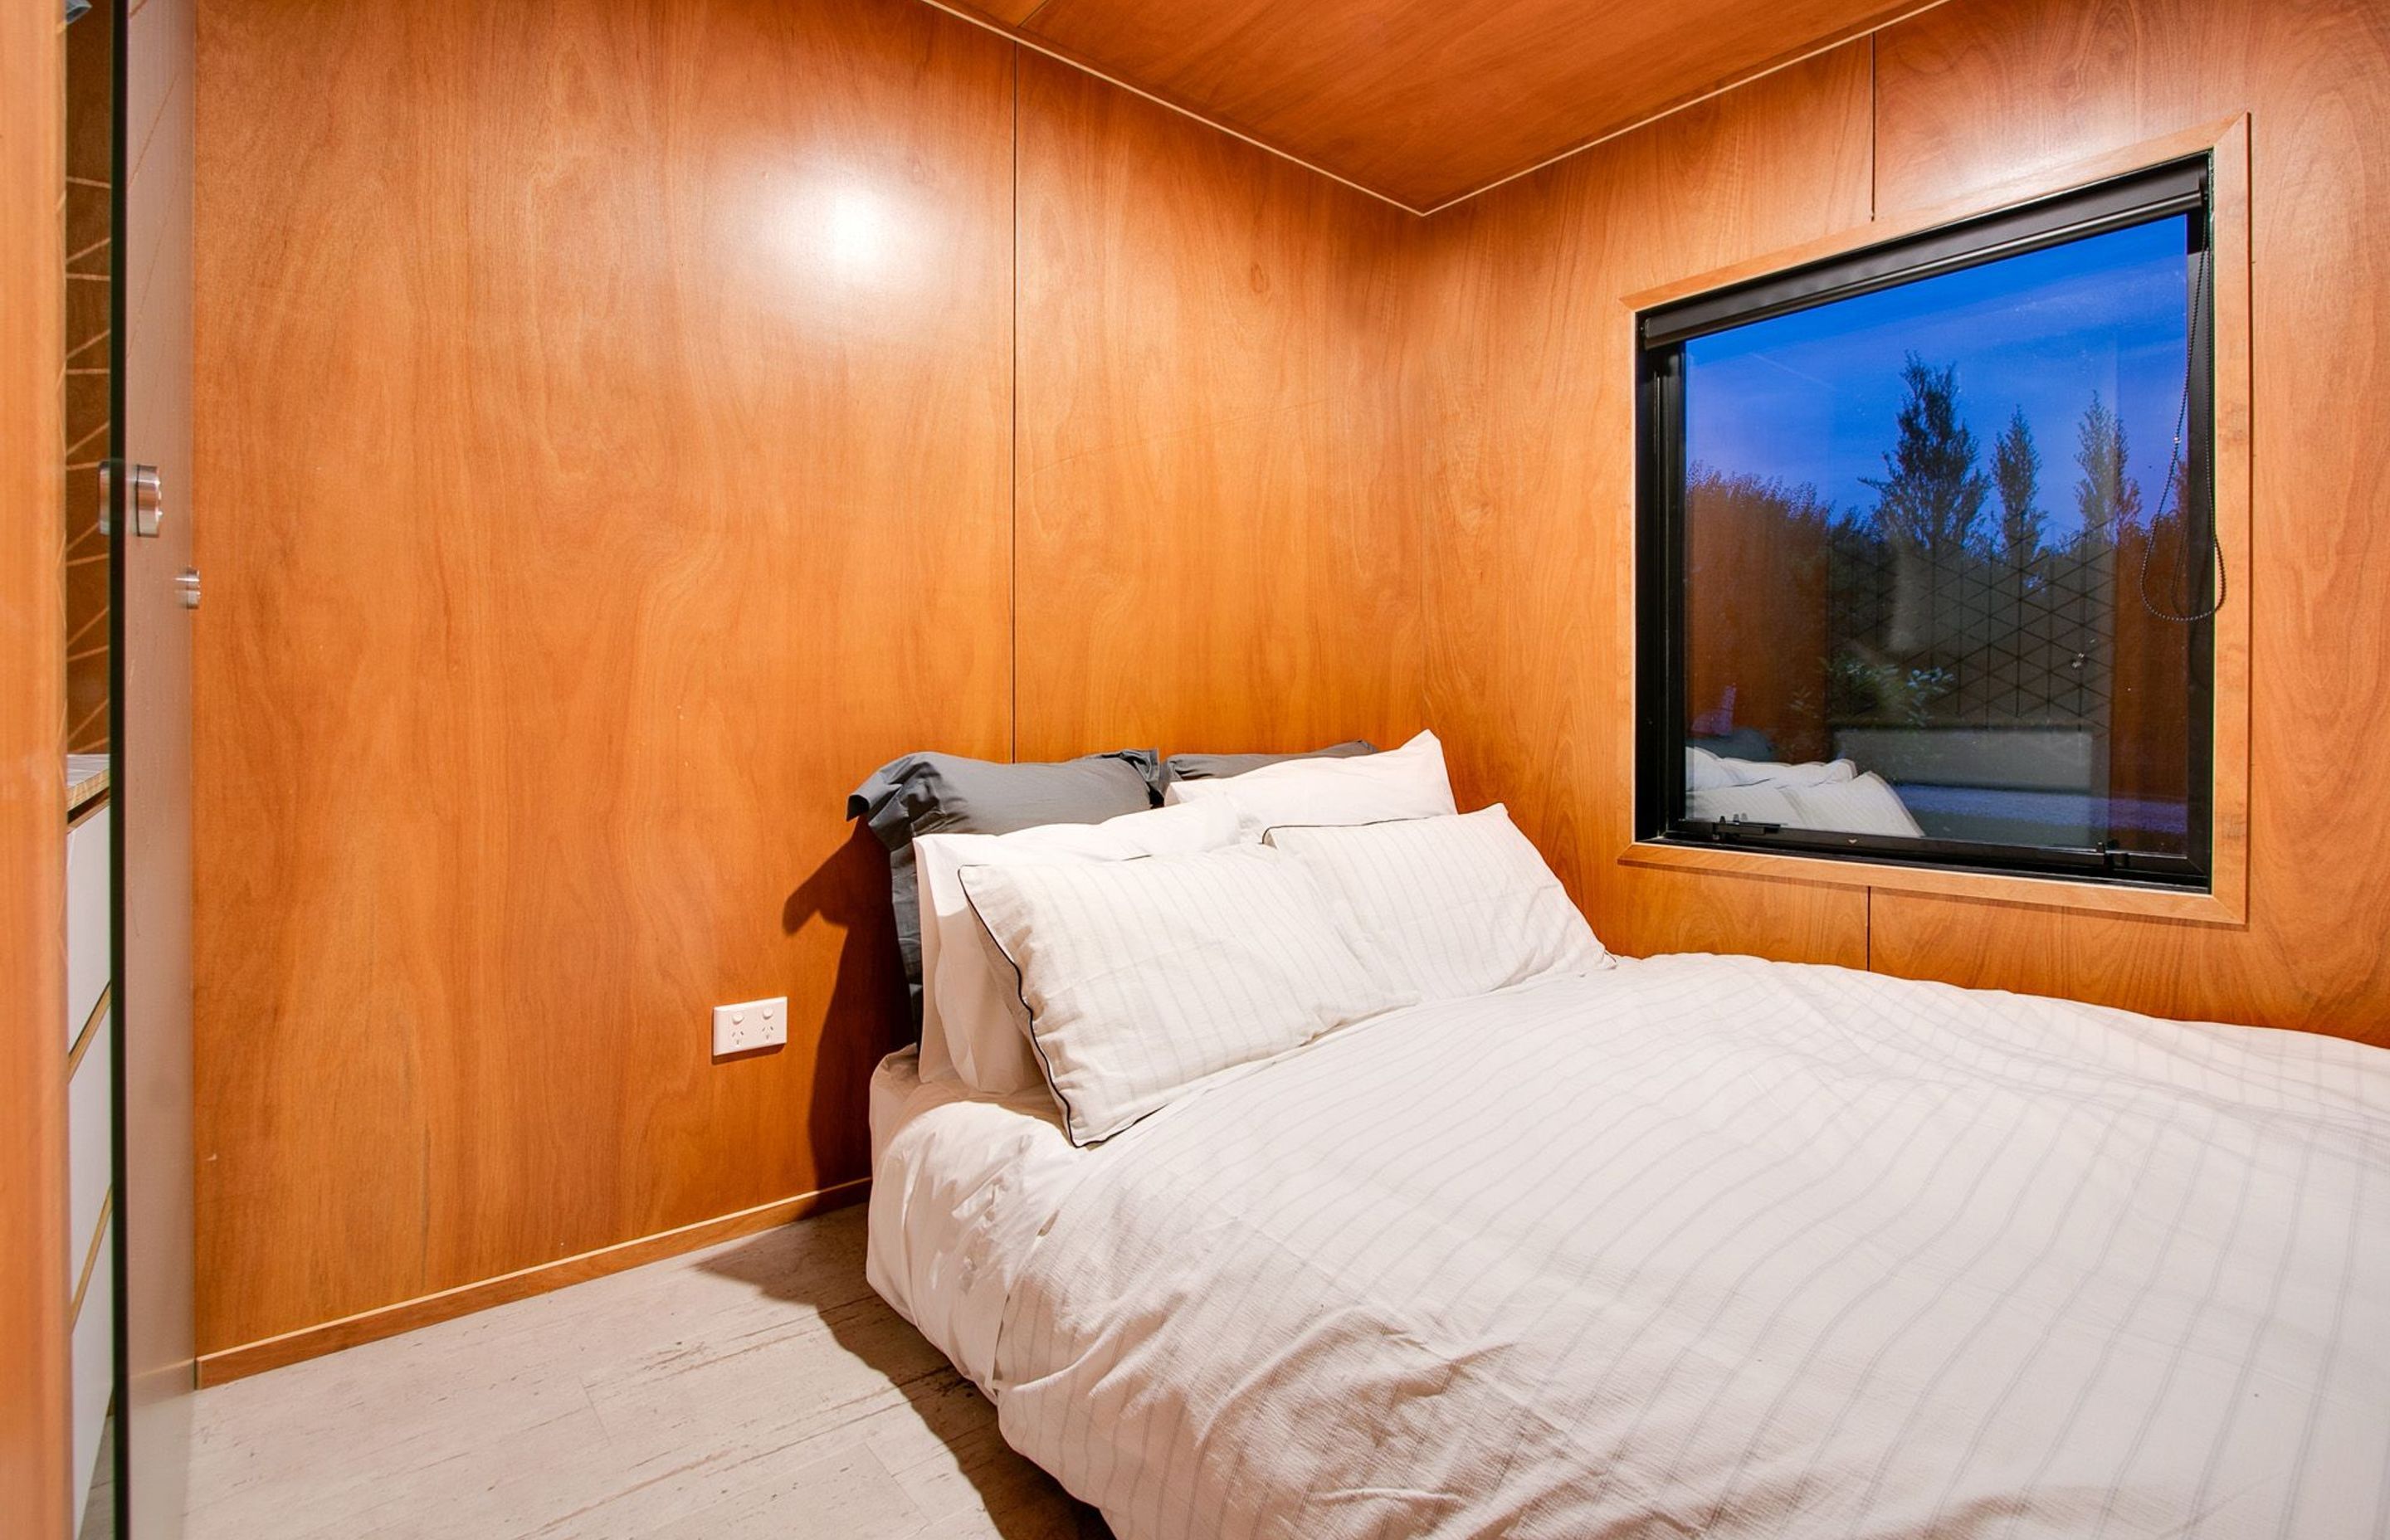 A simple bedroom has built in storage.